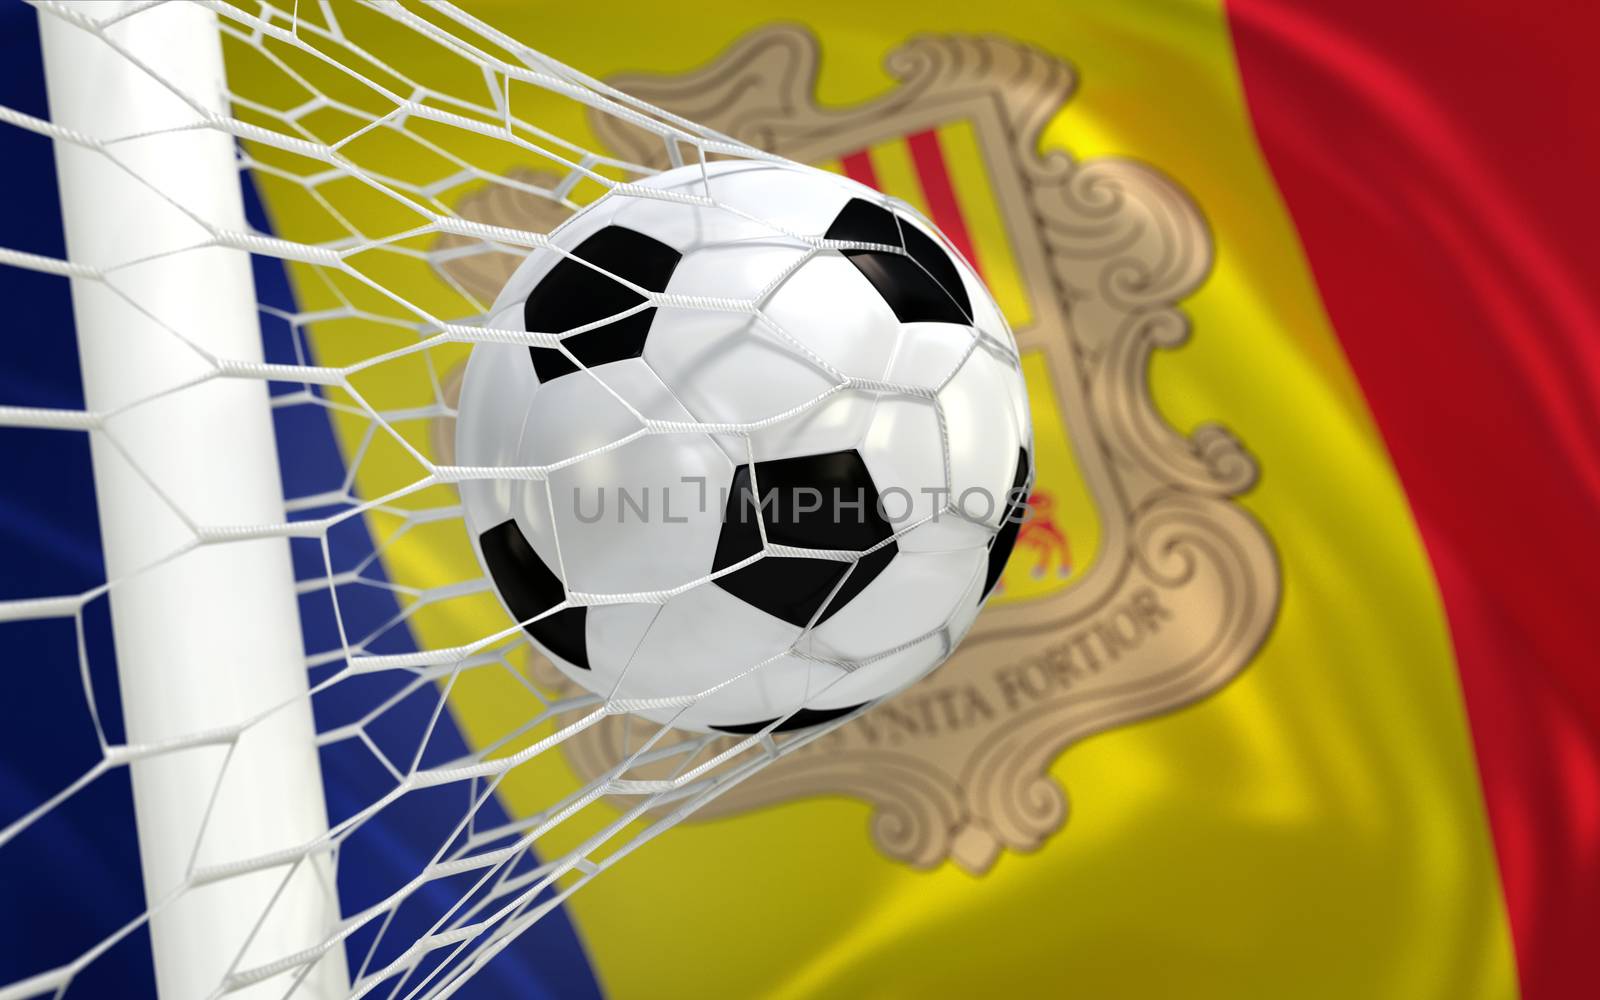 Flag of Andorra and soccer ball in goal net by Barbraford